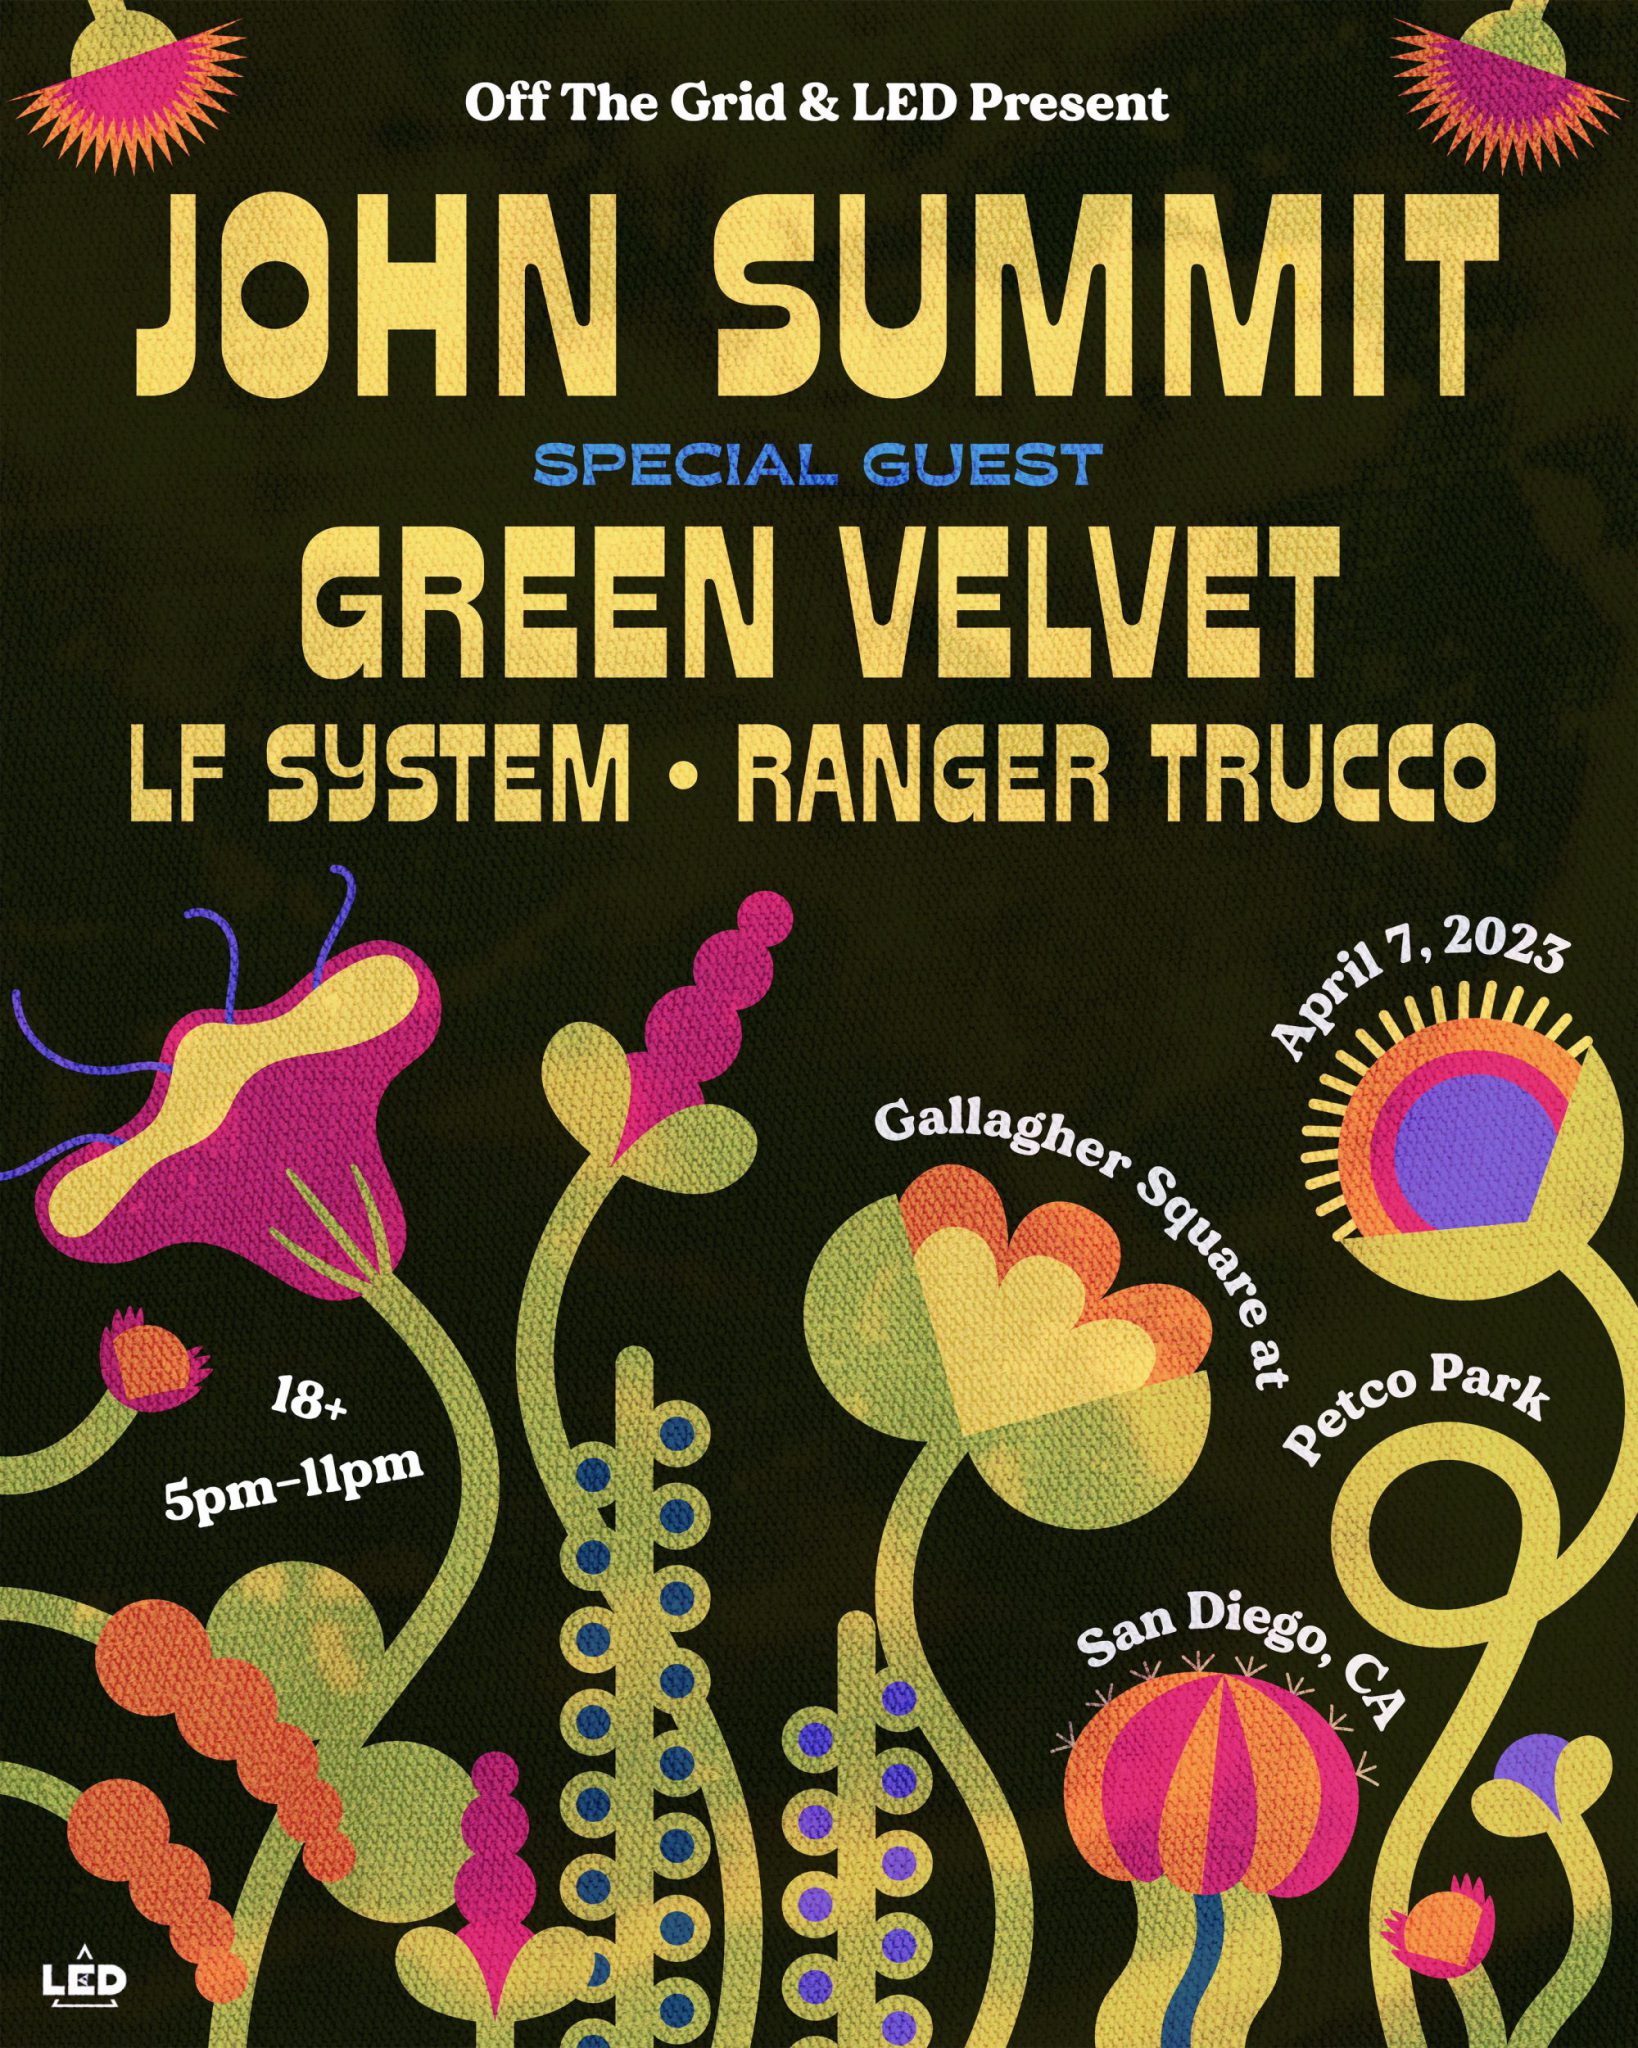 John Summit's OTG Showcase in San Diego